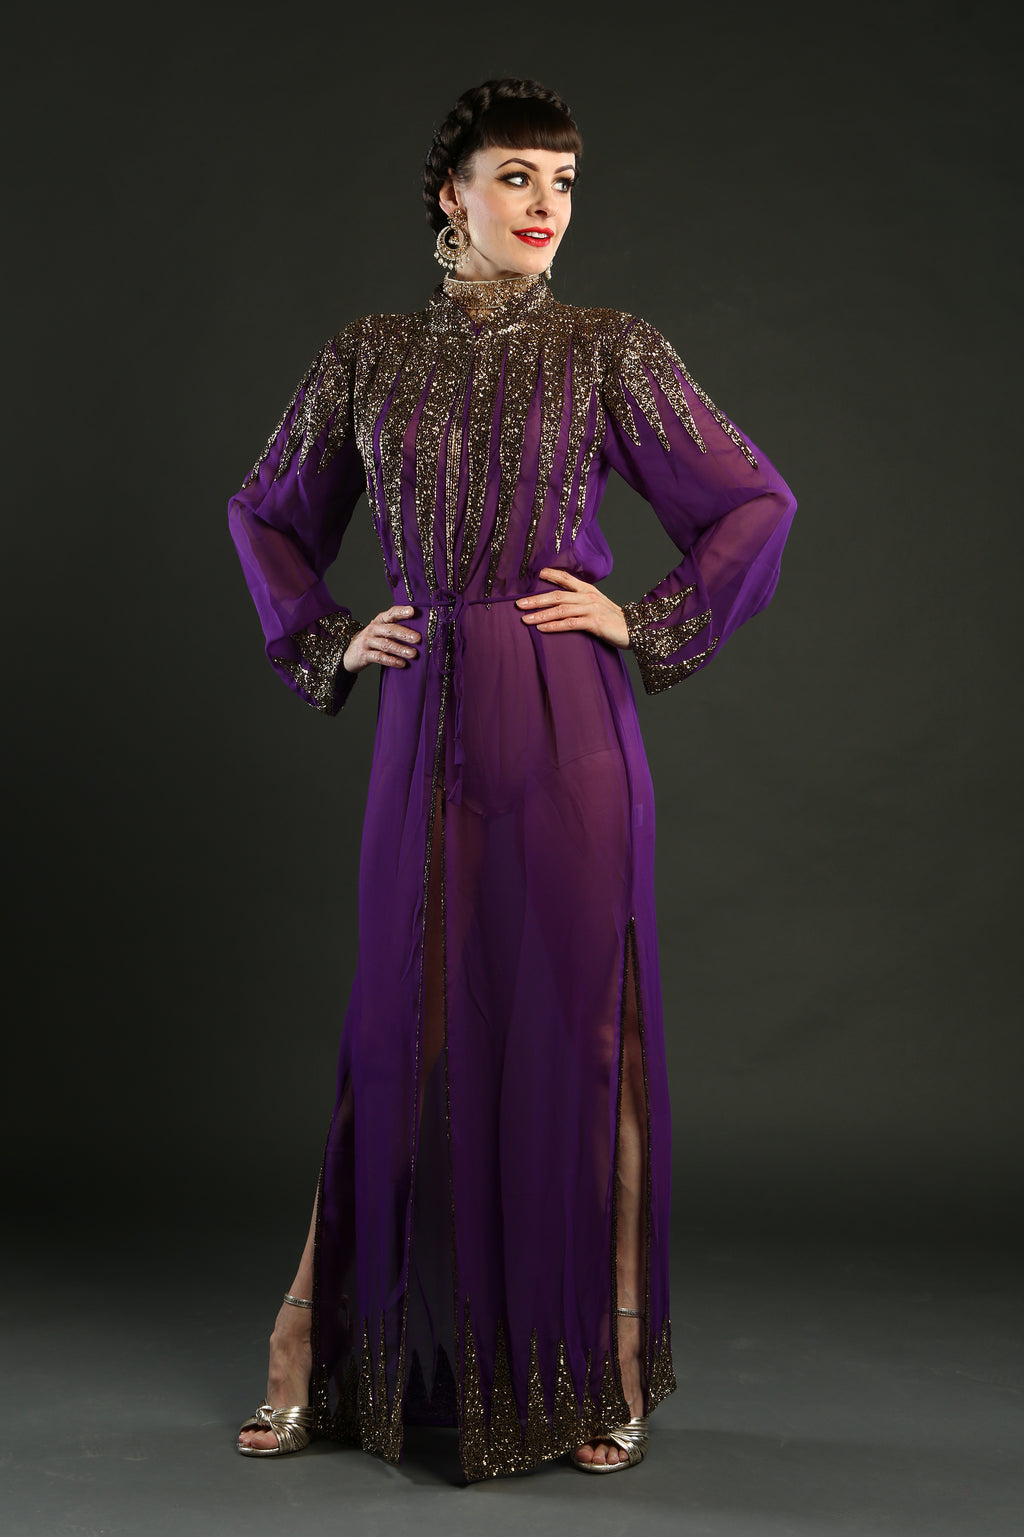 Dark Purple Embellished Gown Overcoat circus costume 1920 showgirl